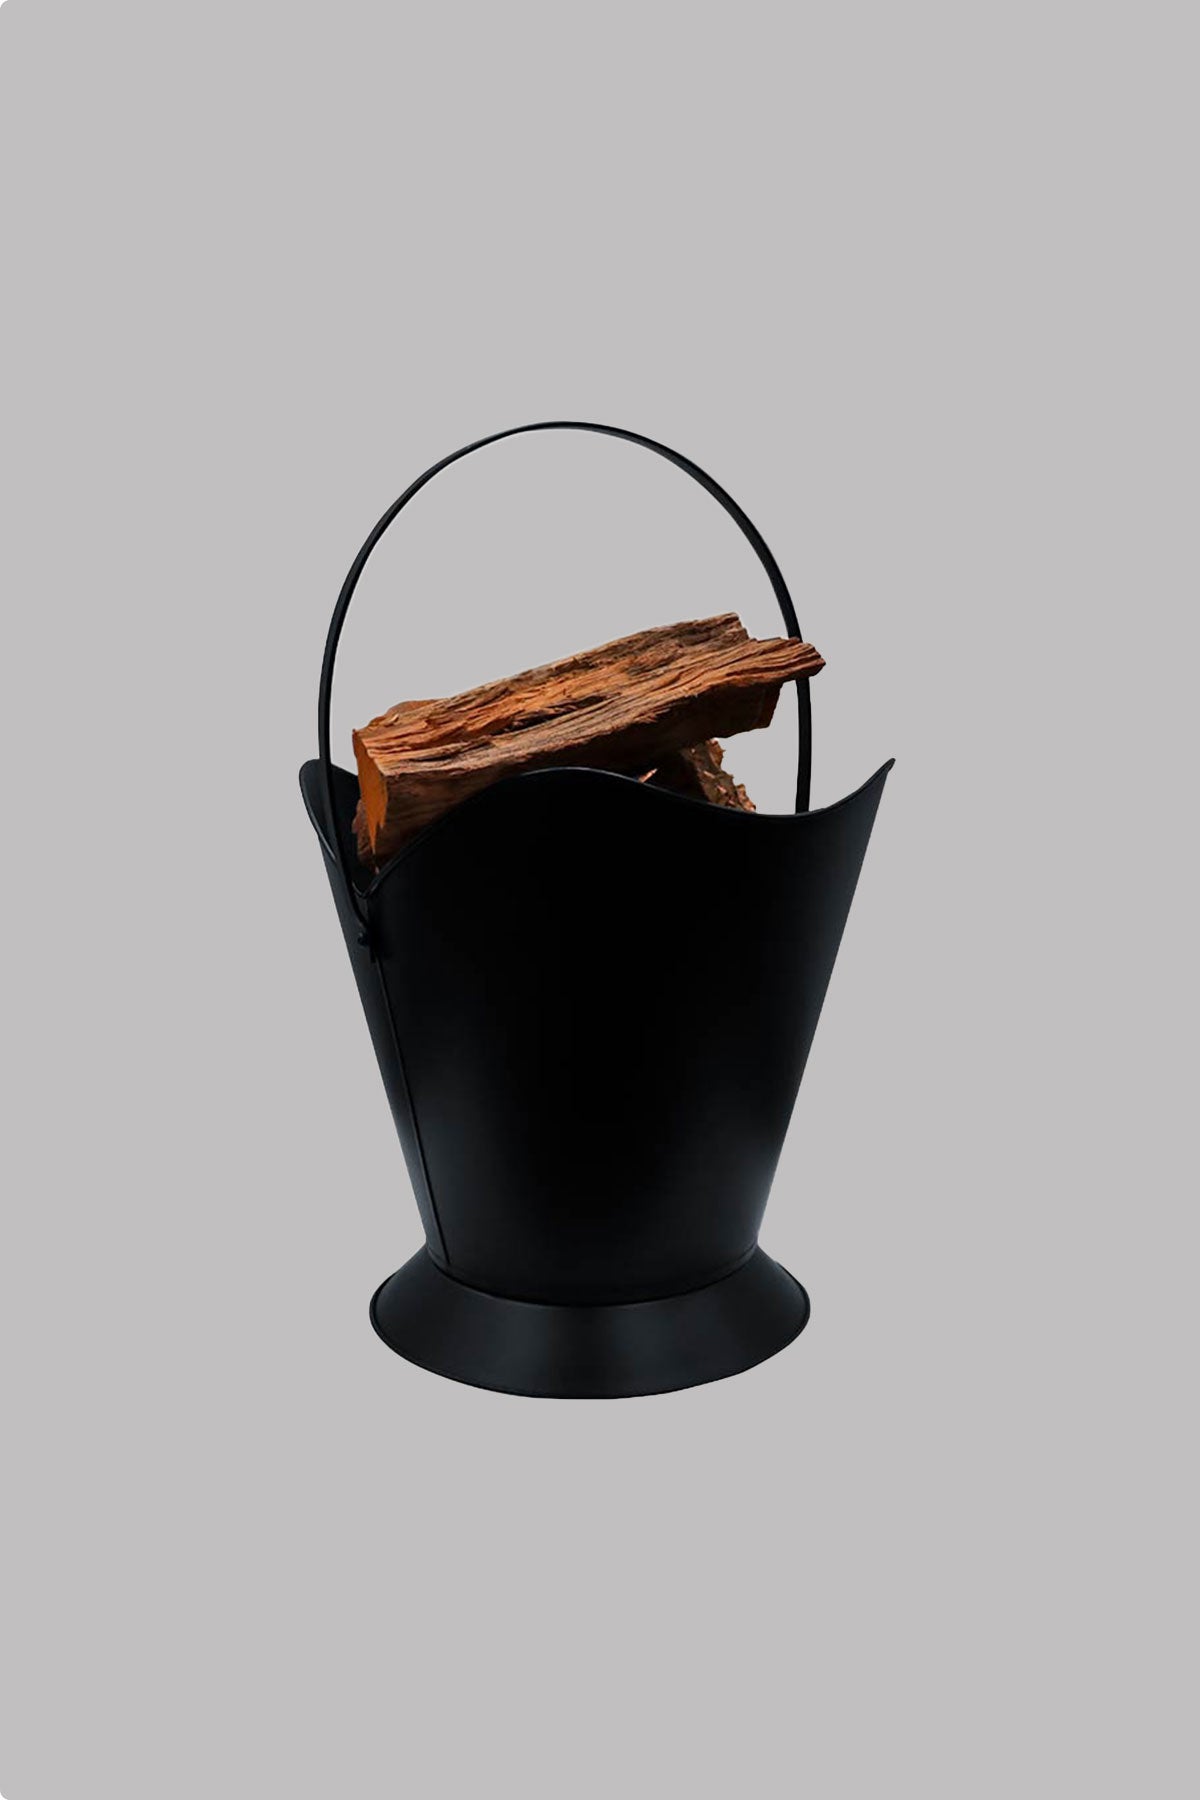 wood bucket, log storage